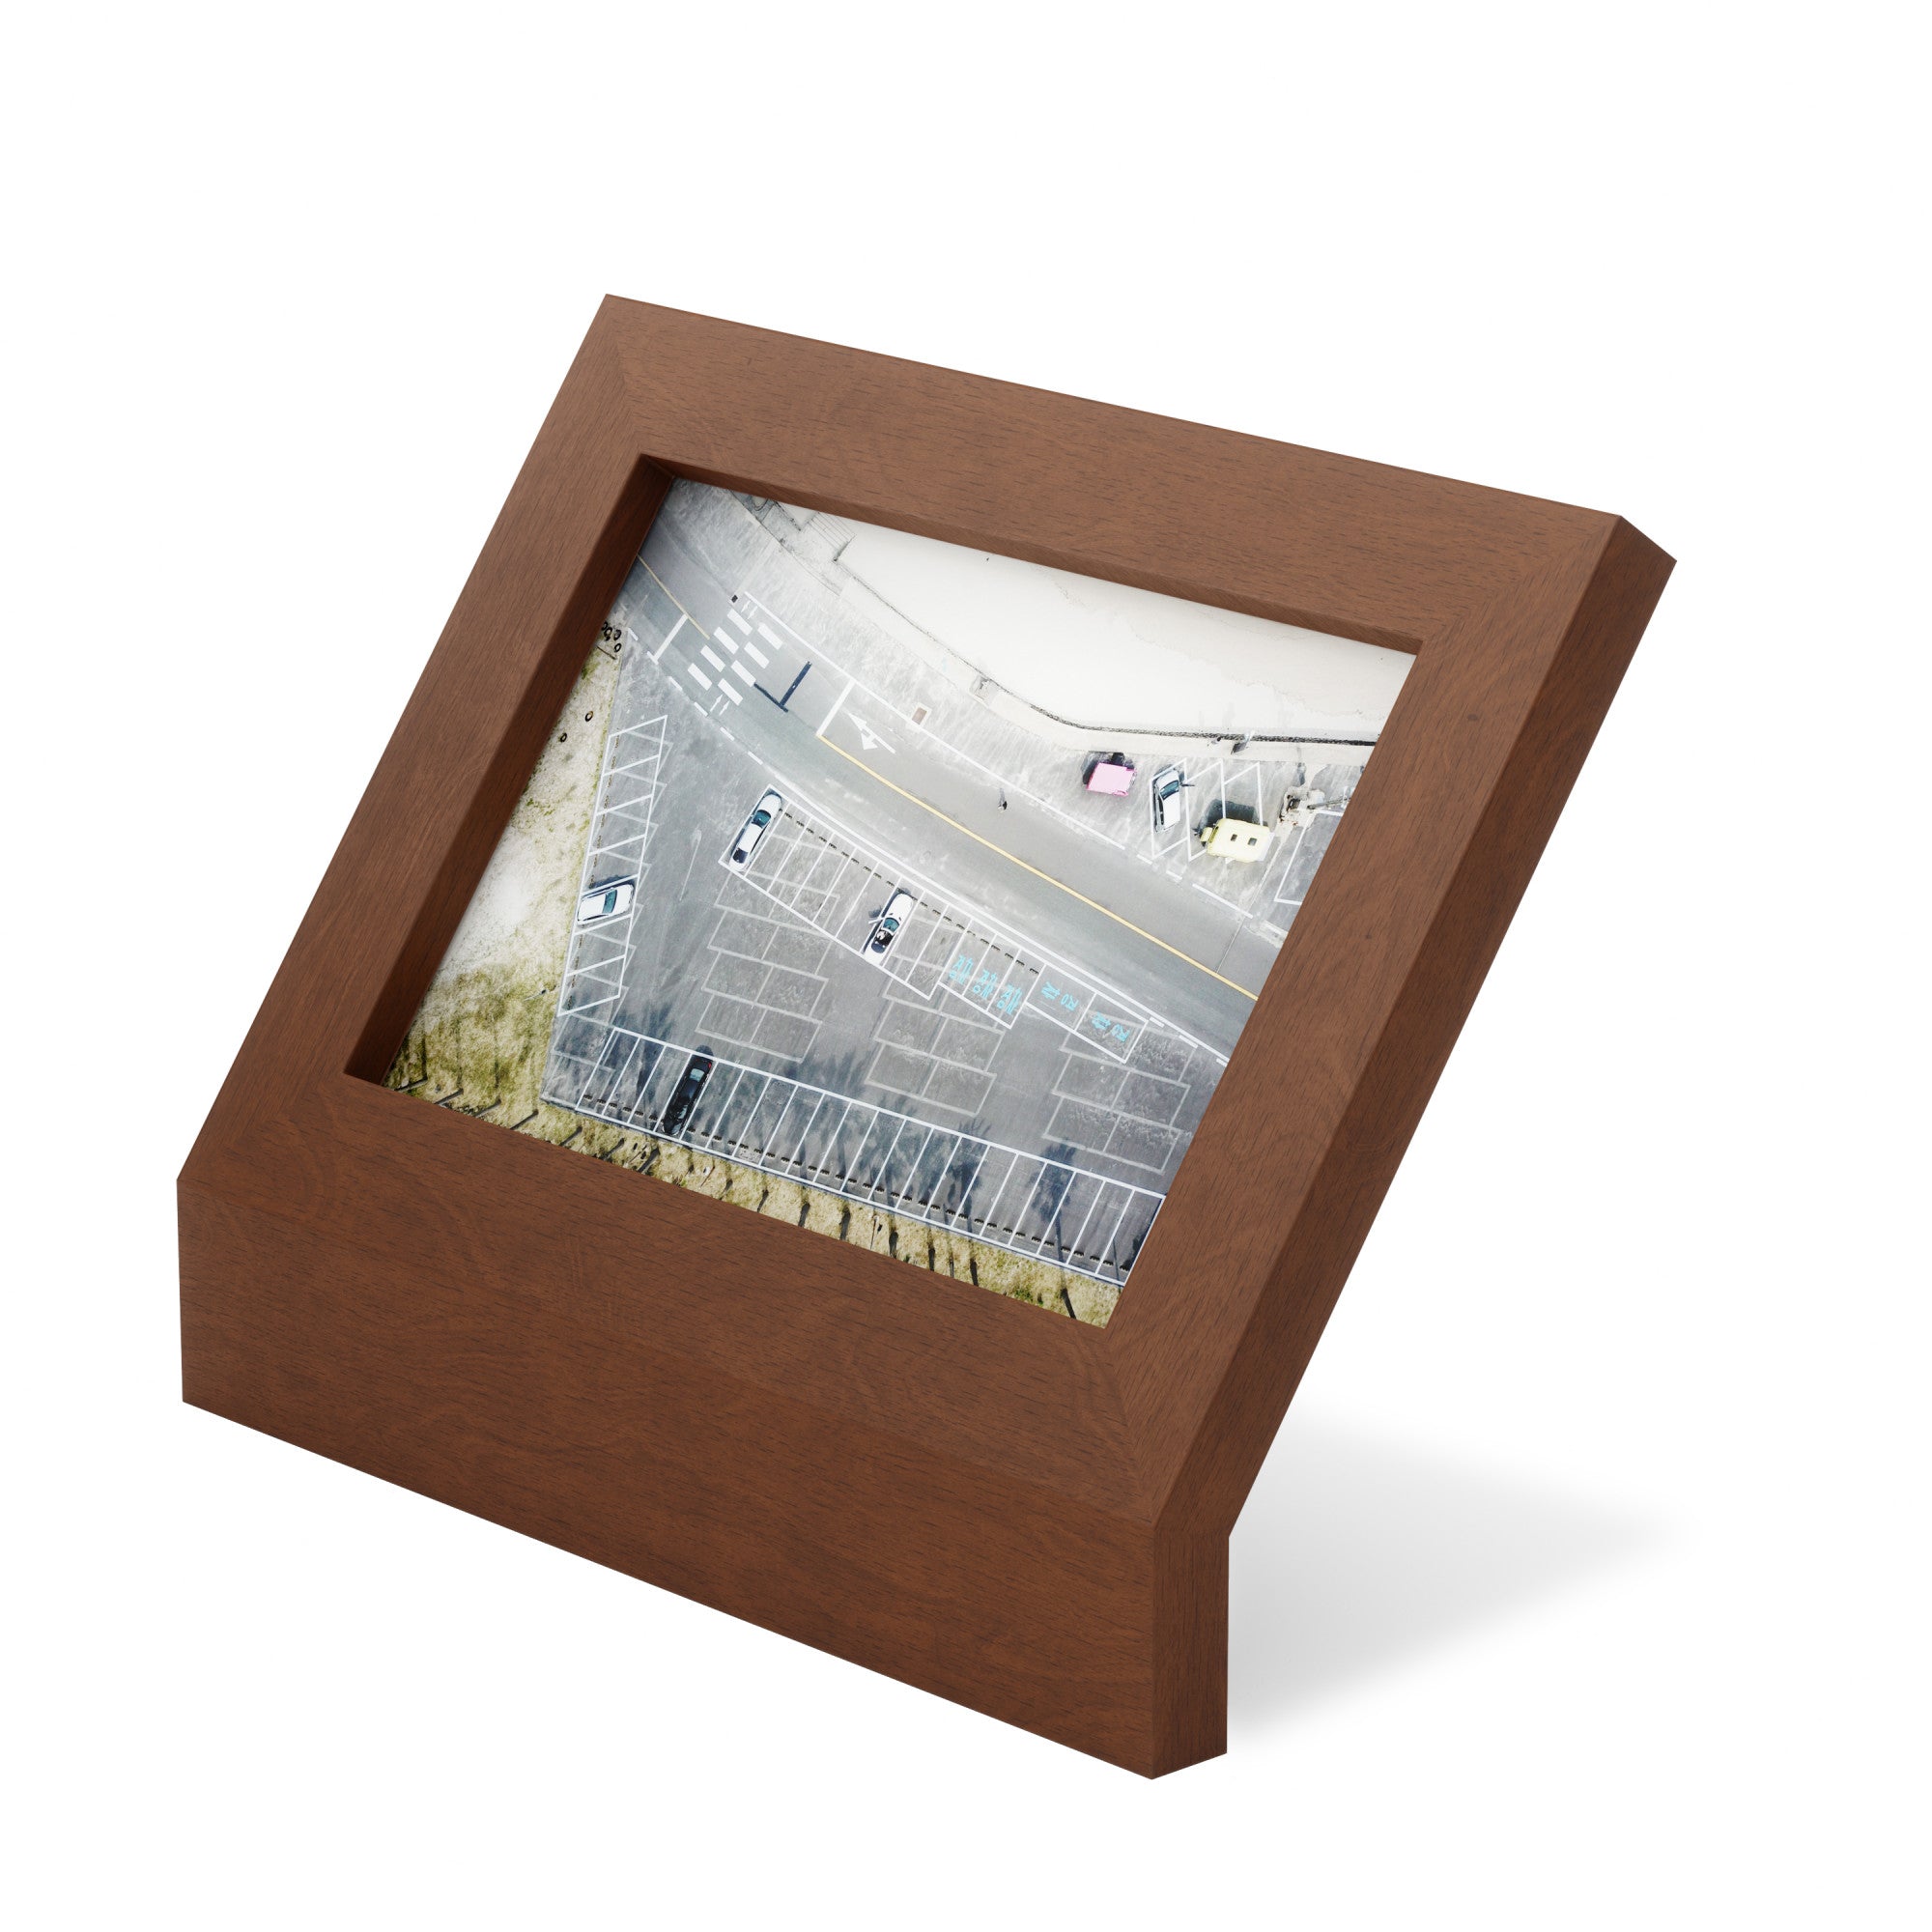 Tabletop Frames | color: Light-Walnut | size: 4x6"""" (10x15 cm)